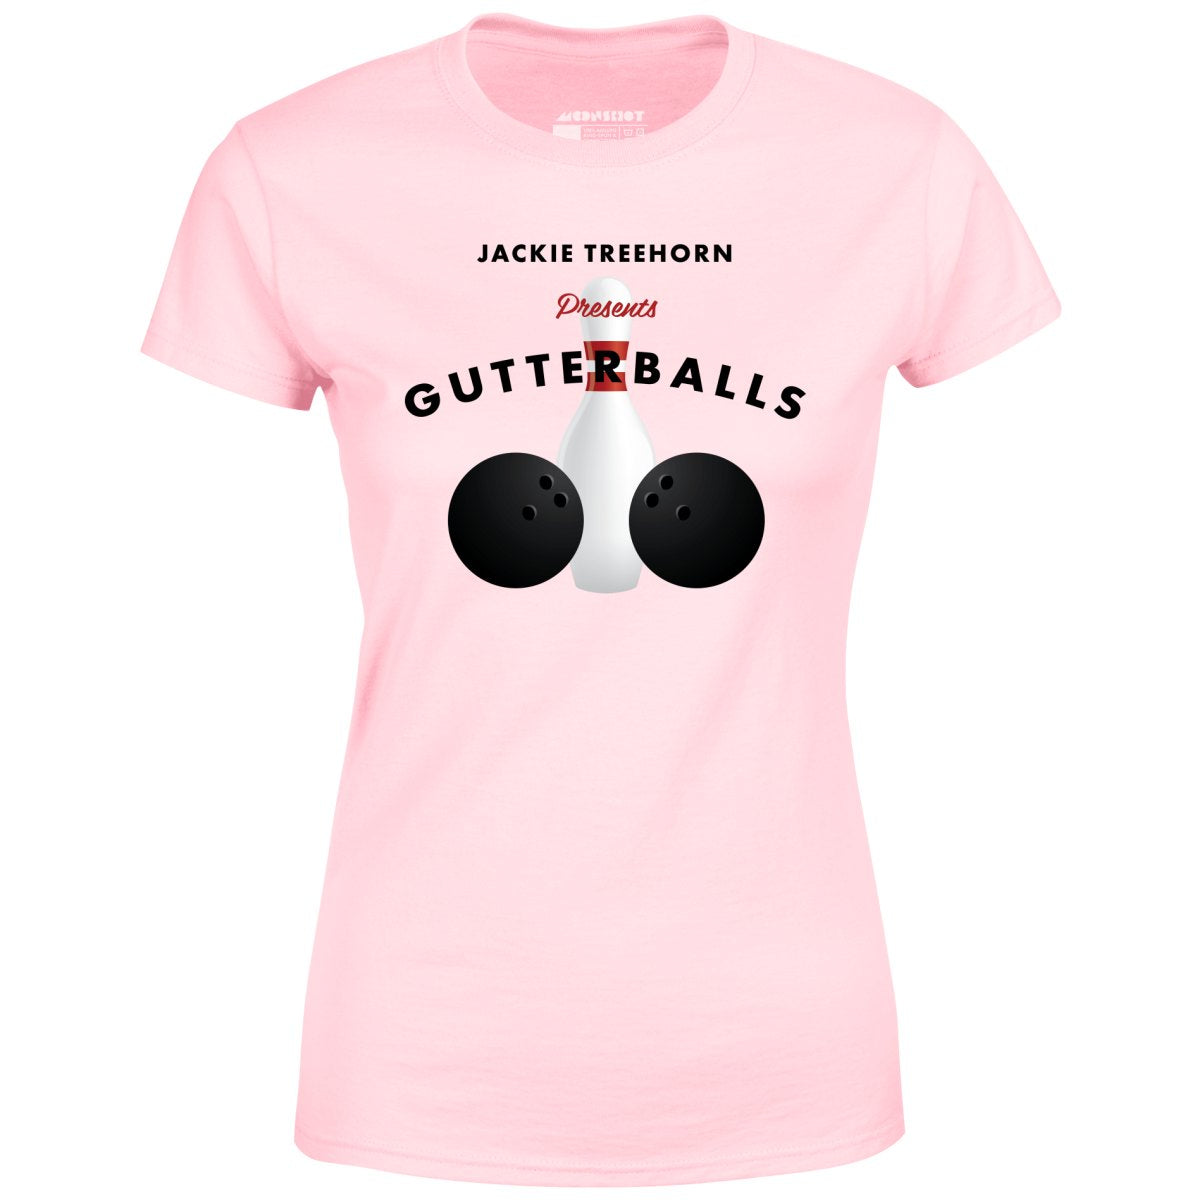 Jackie Treehorn Presents Gutterballs - Women's T-Shirt